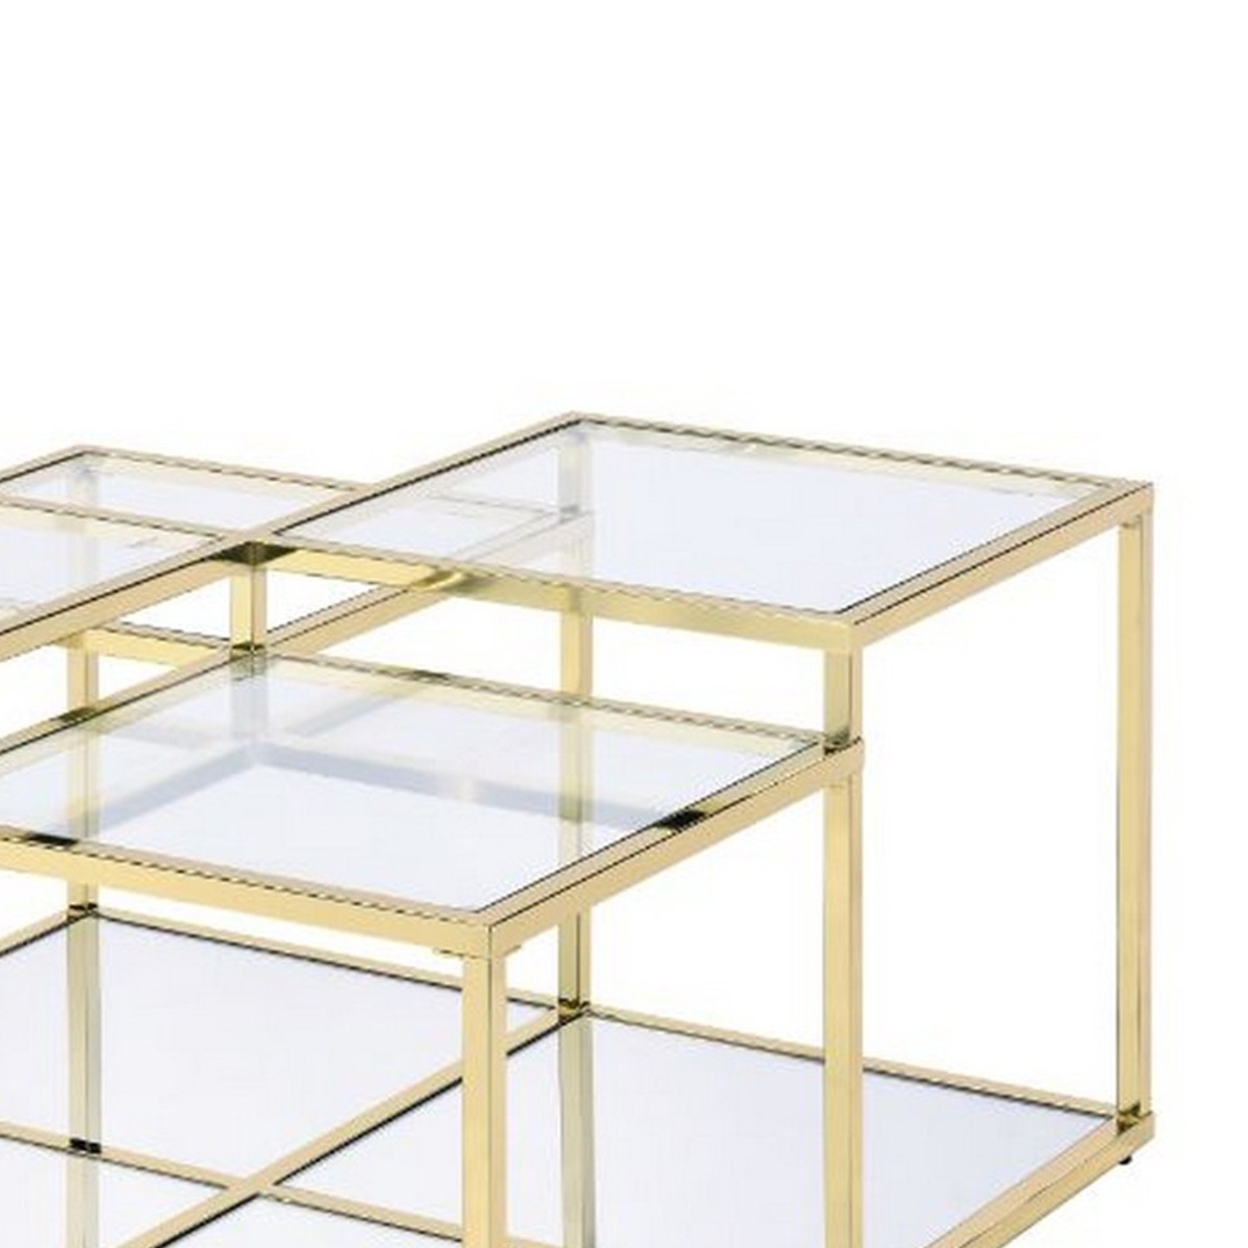 Coffee Table With Glass Top And Tubular Frame, Gold- Saltoro Sherpi